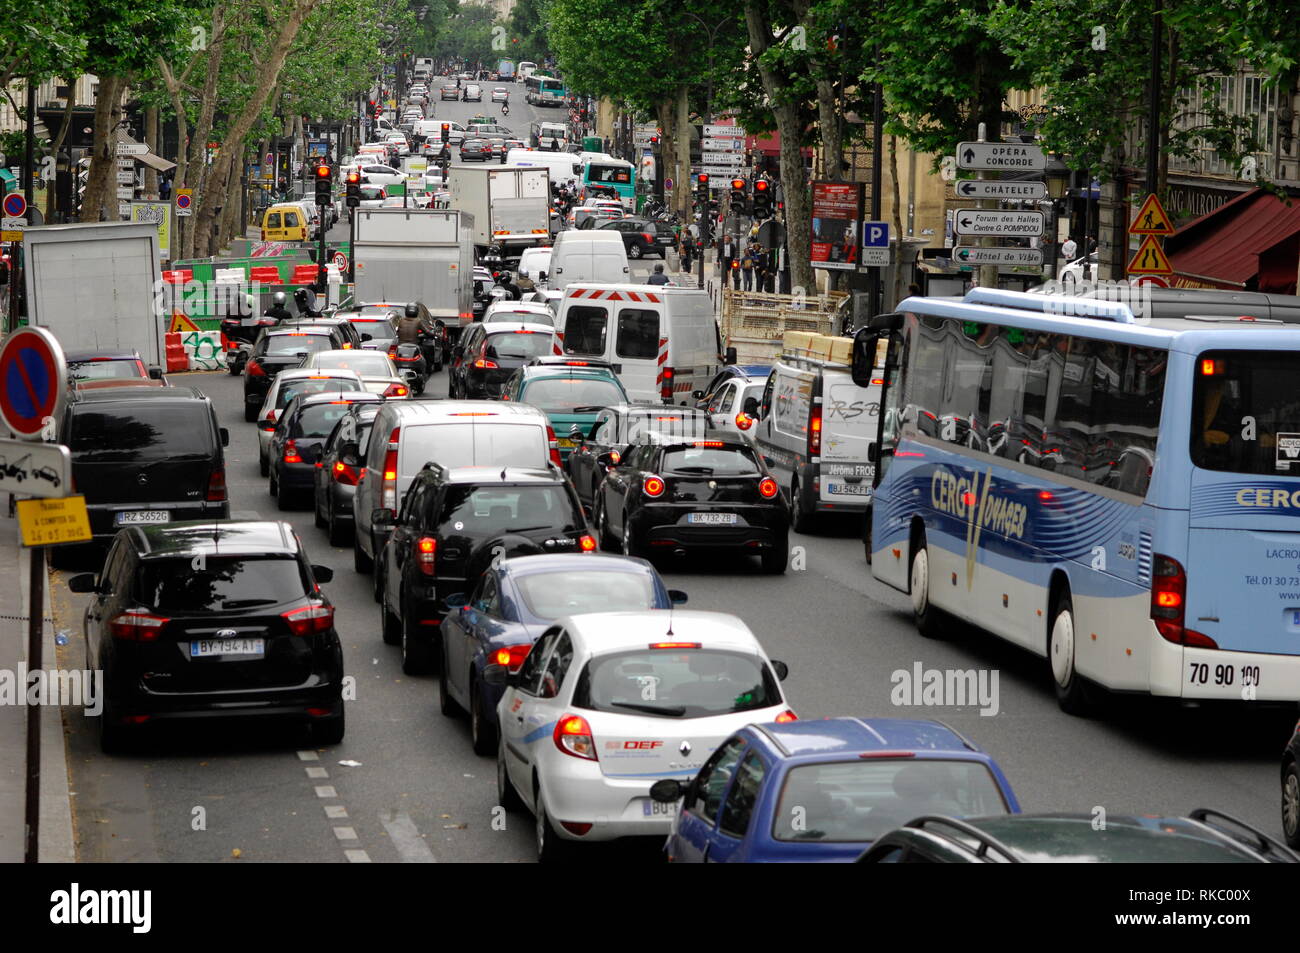 AJAXNETPHOTO. Parigi, Francia, Parigi. - Il traffico della città - su Blvd. SAINT-MARTIN. Foto:JONATHAN EASTLAND/AJAX REF:D121506 2597 Foto Stock